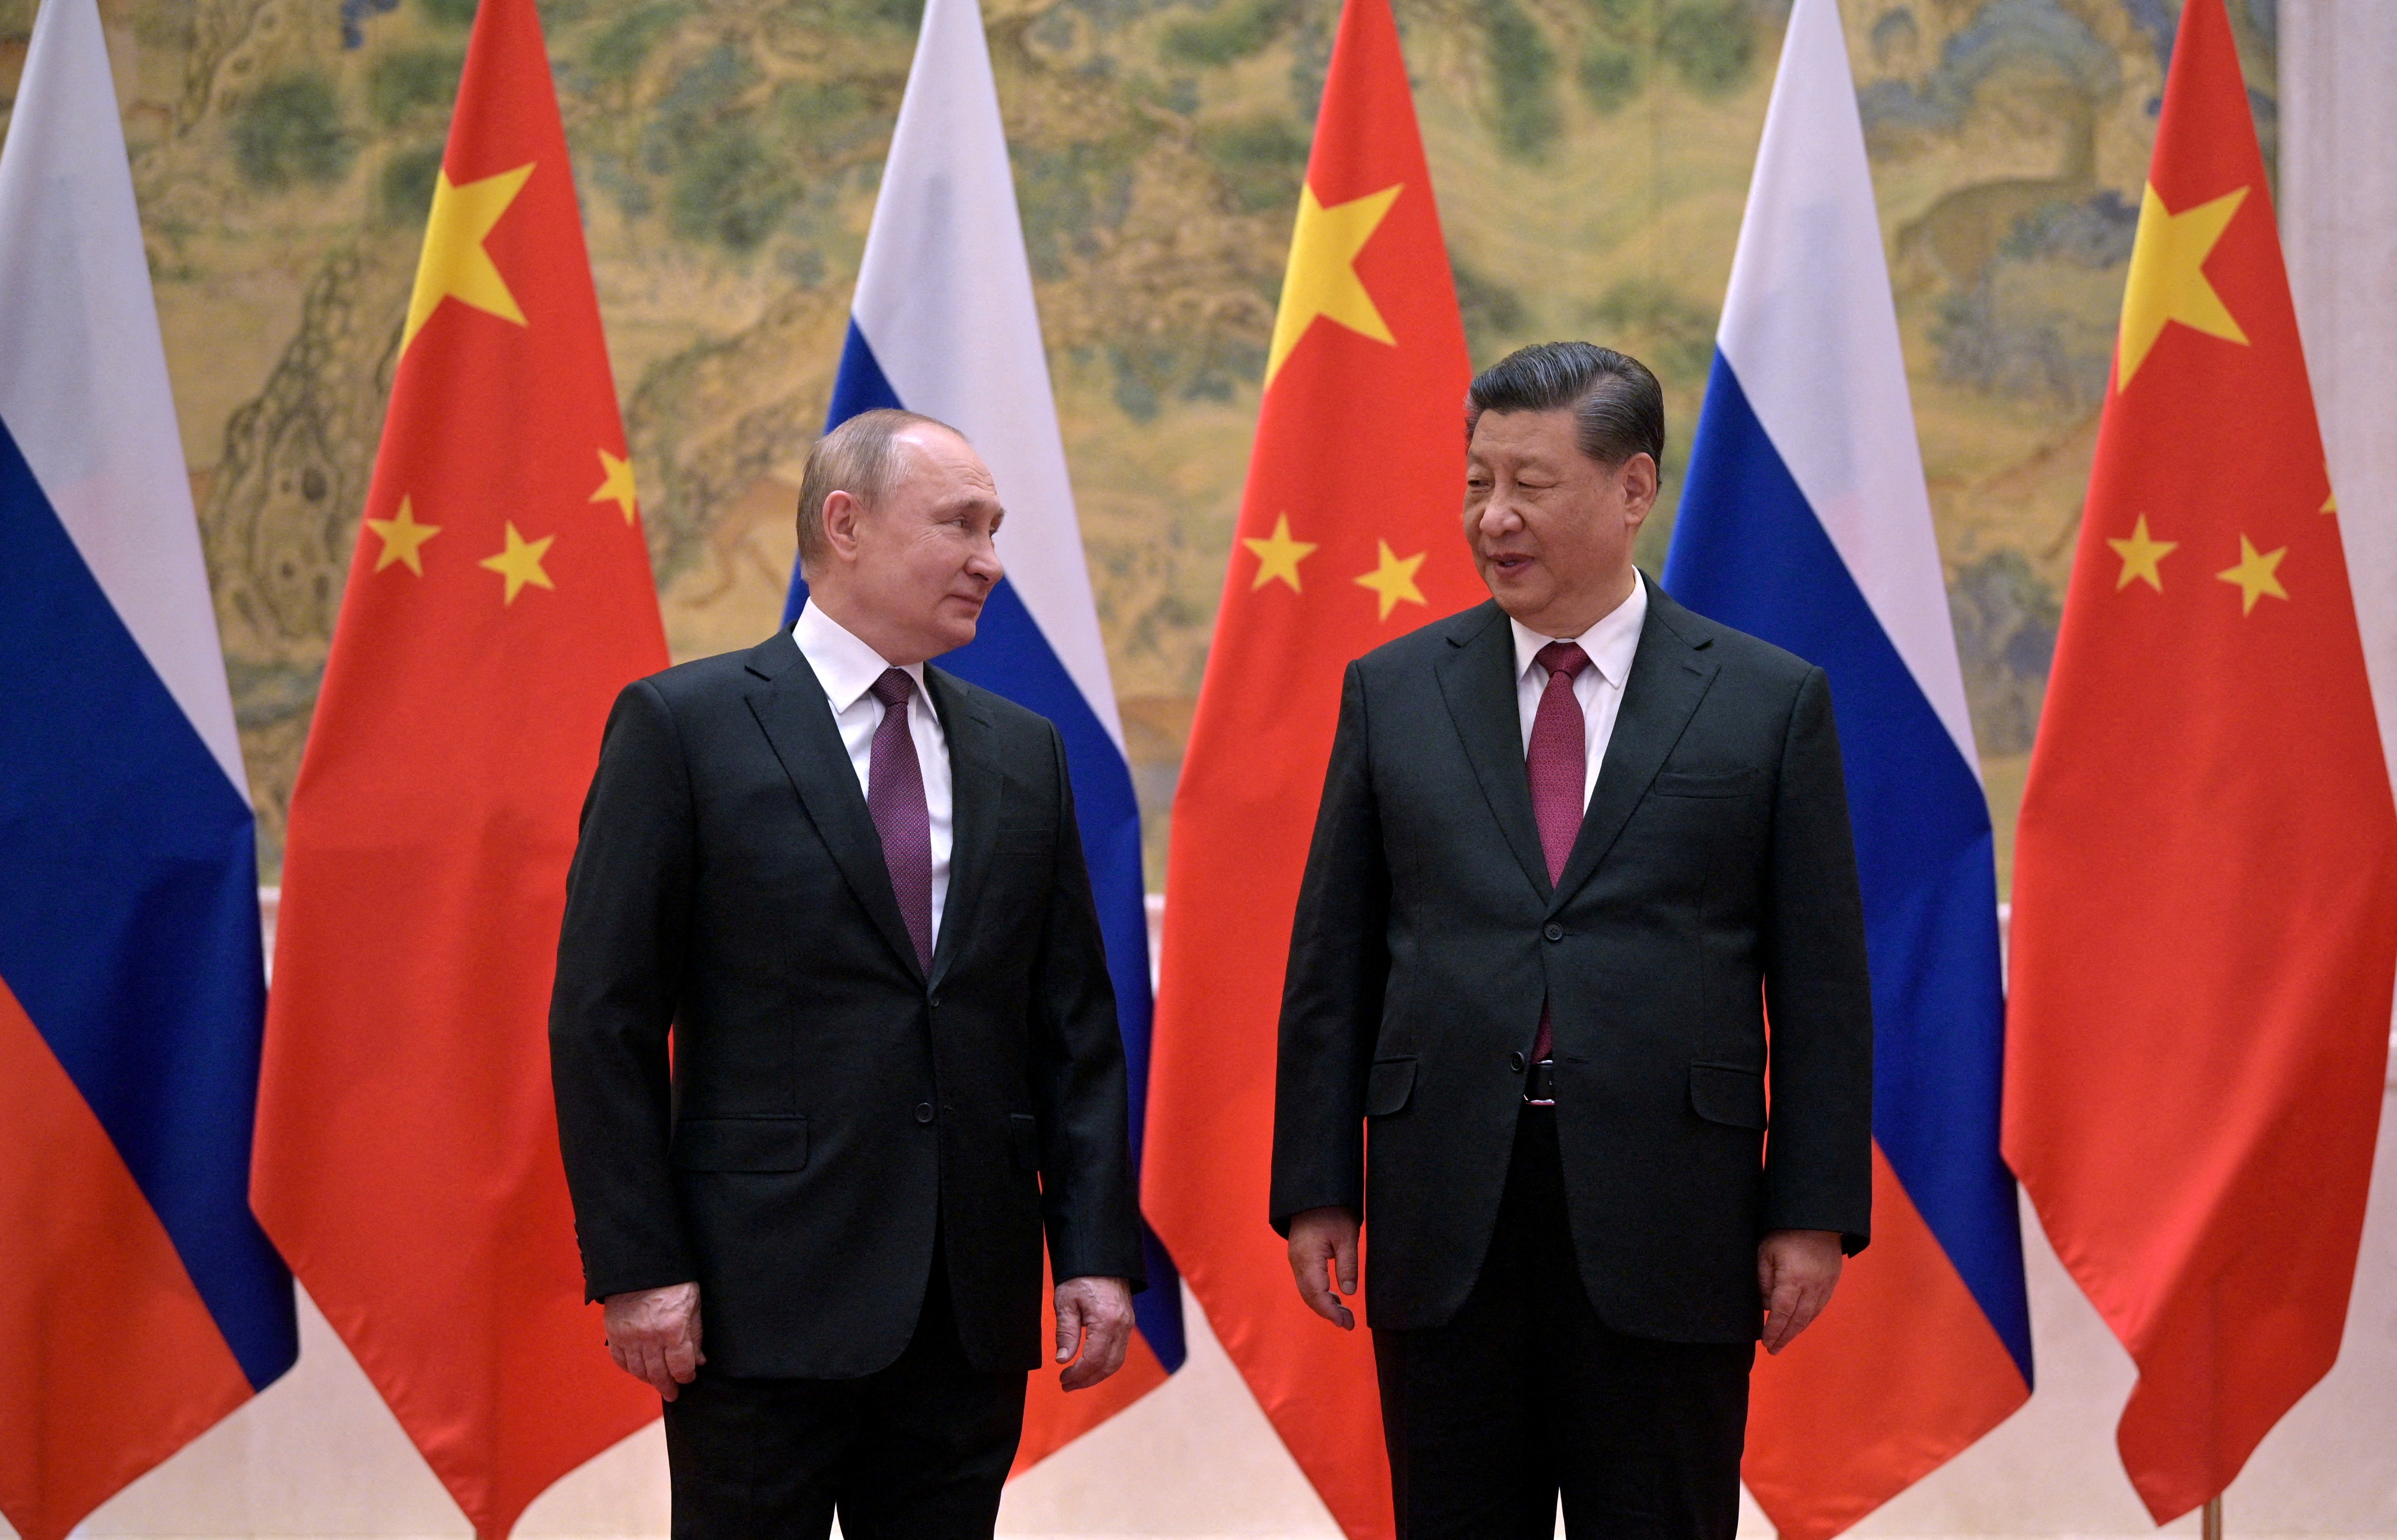 Russian President Putin meets Chinese President Xi in Beijing